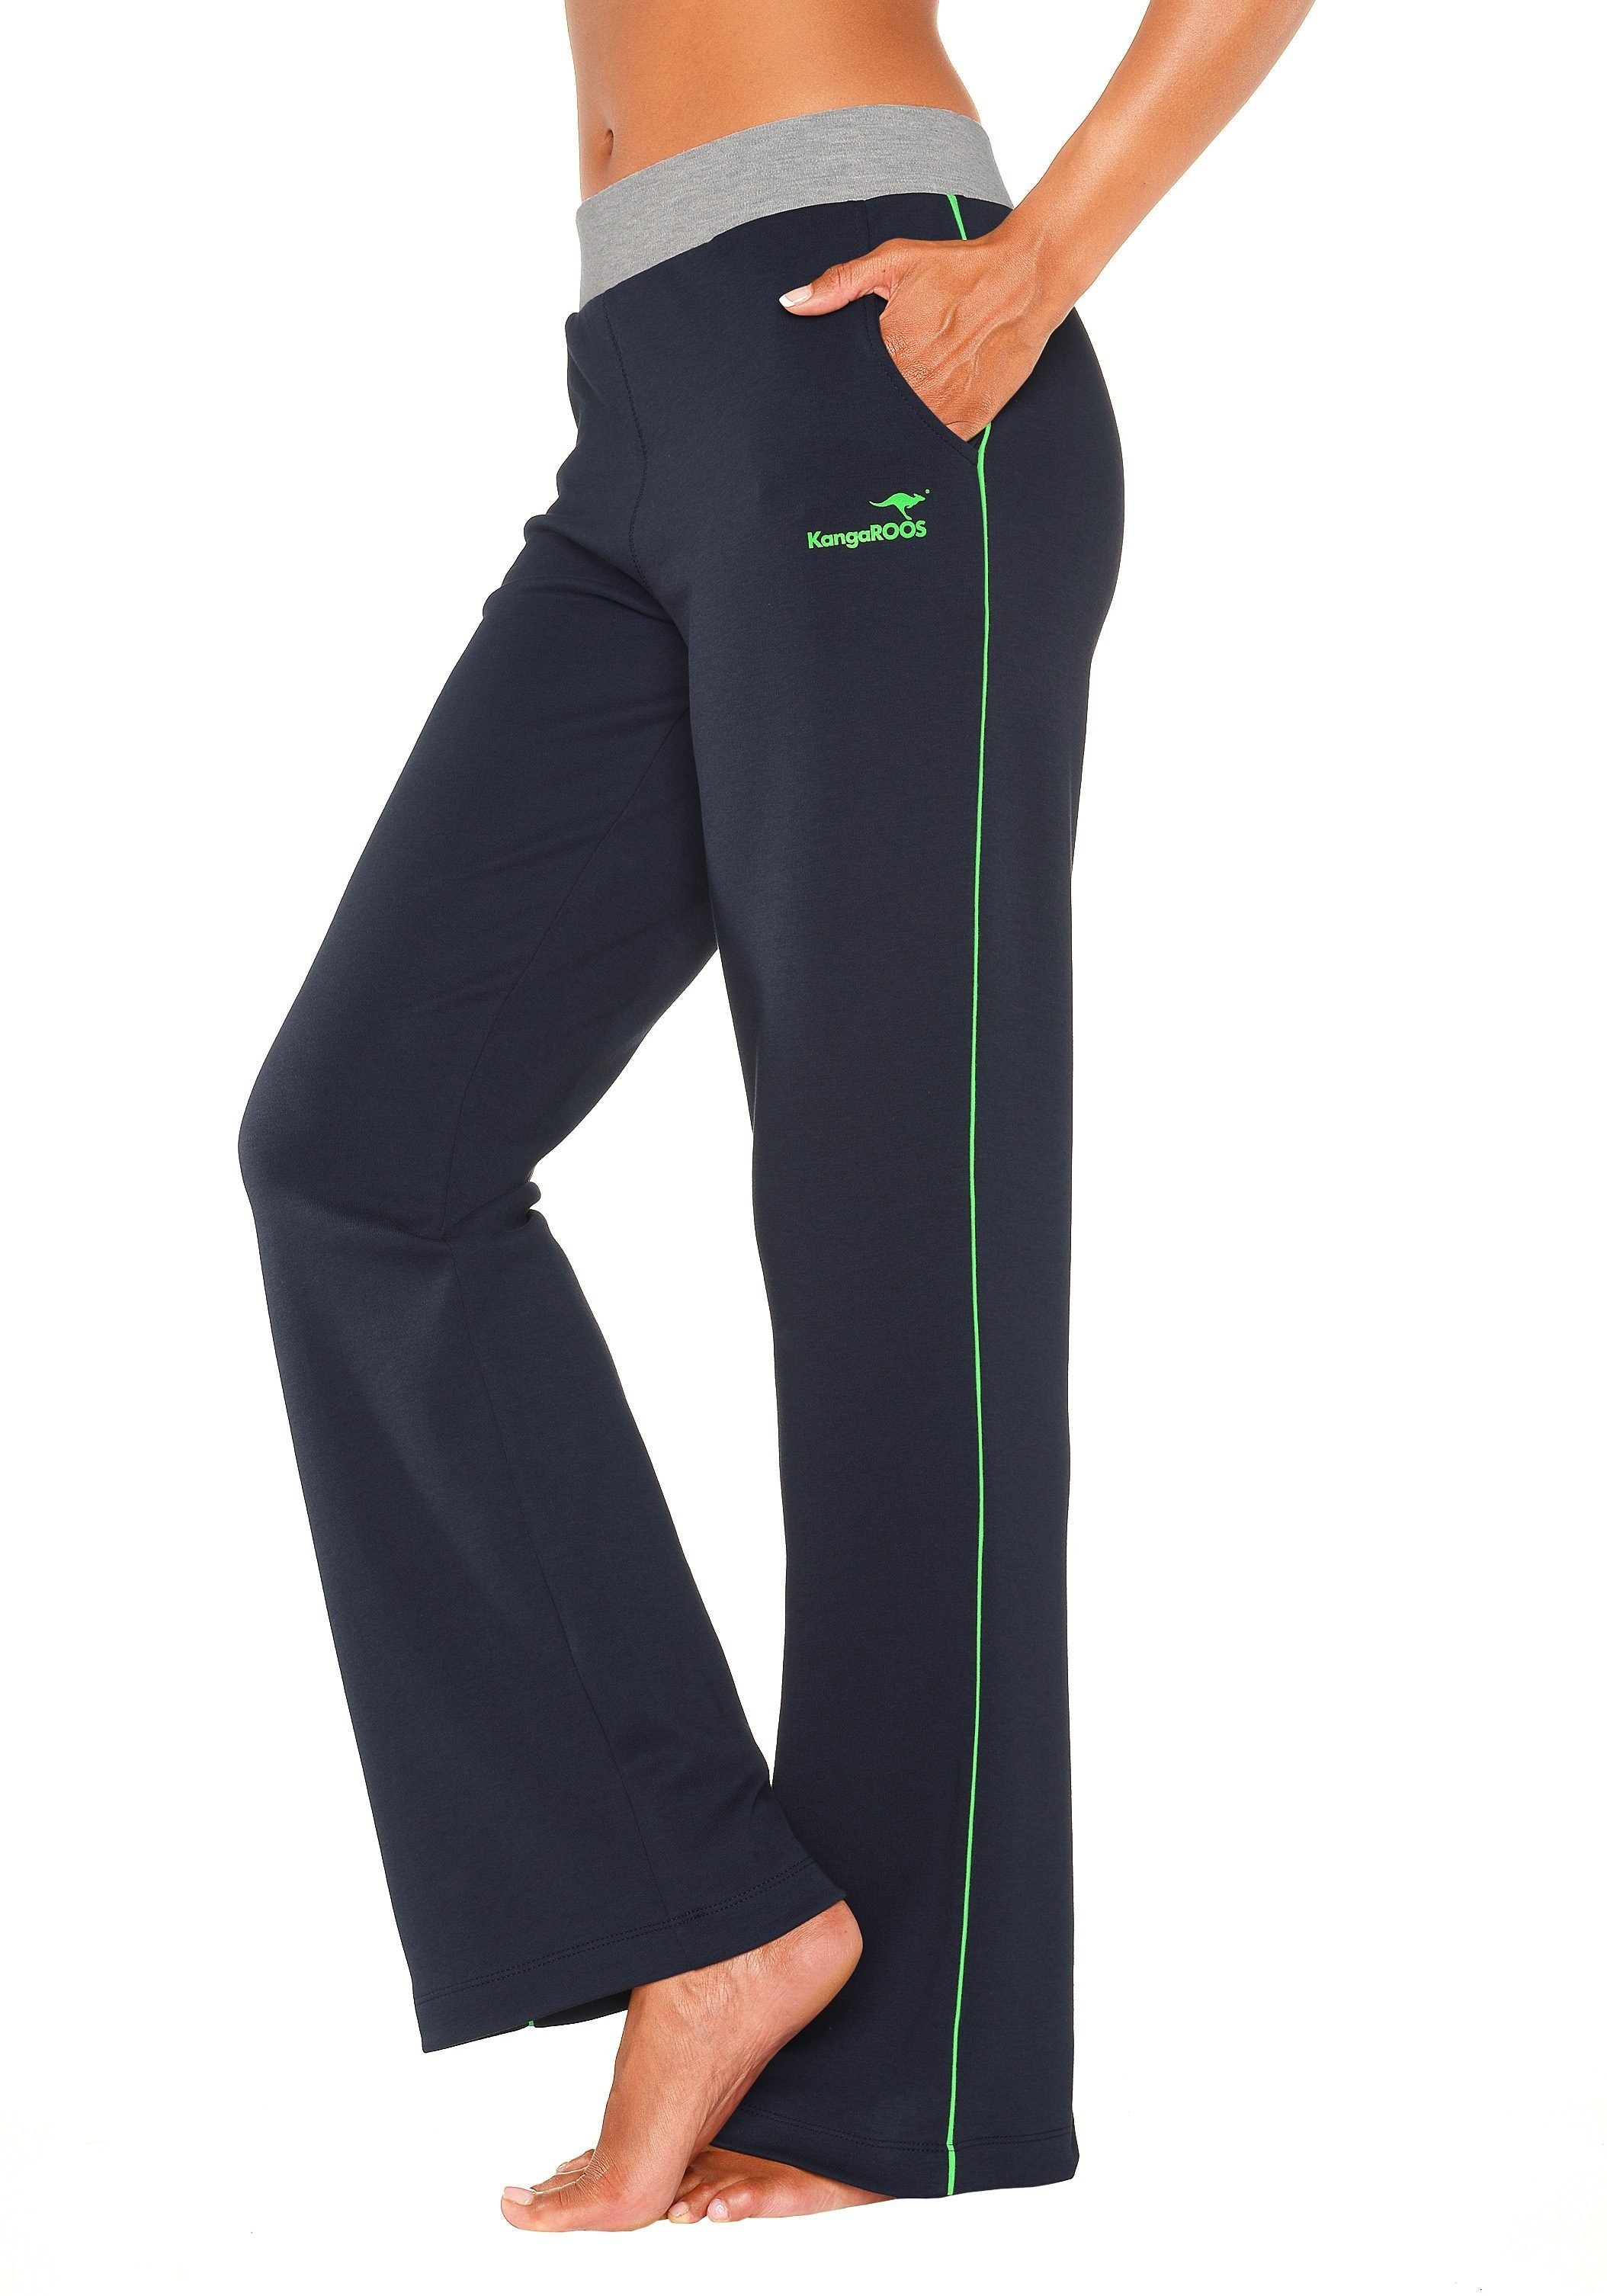 KangaROOS Relaxhose mit Loungeanzug marine-grün-grün Bund, breitem Loungewear